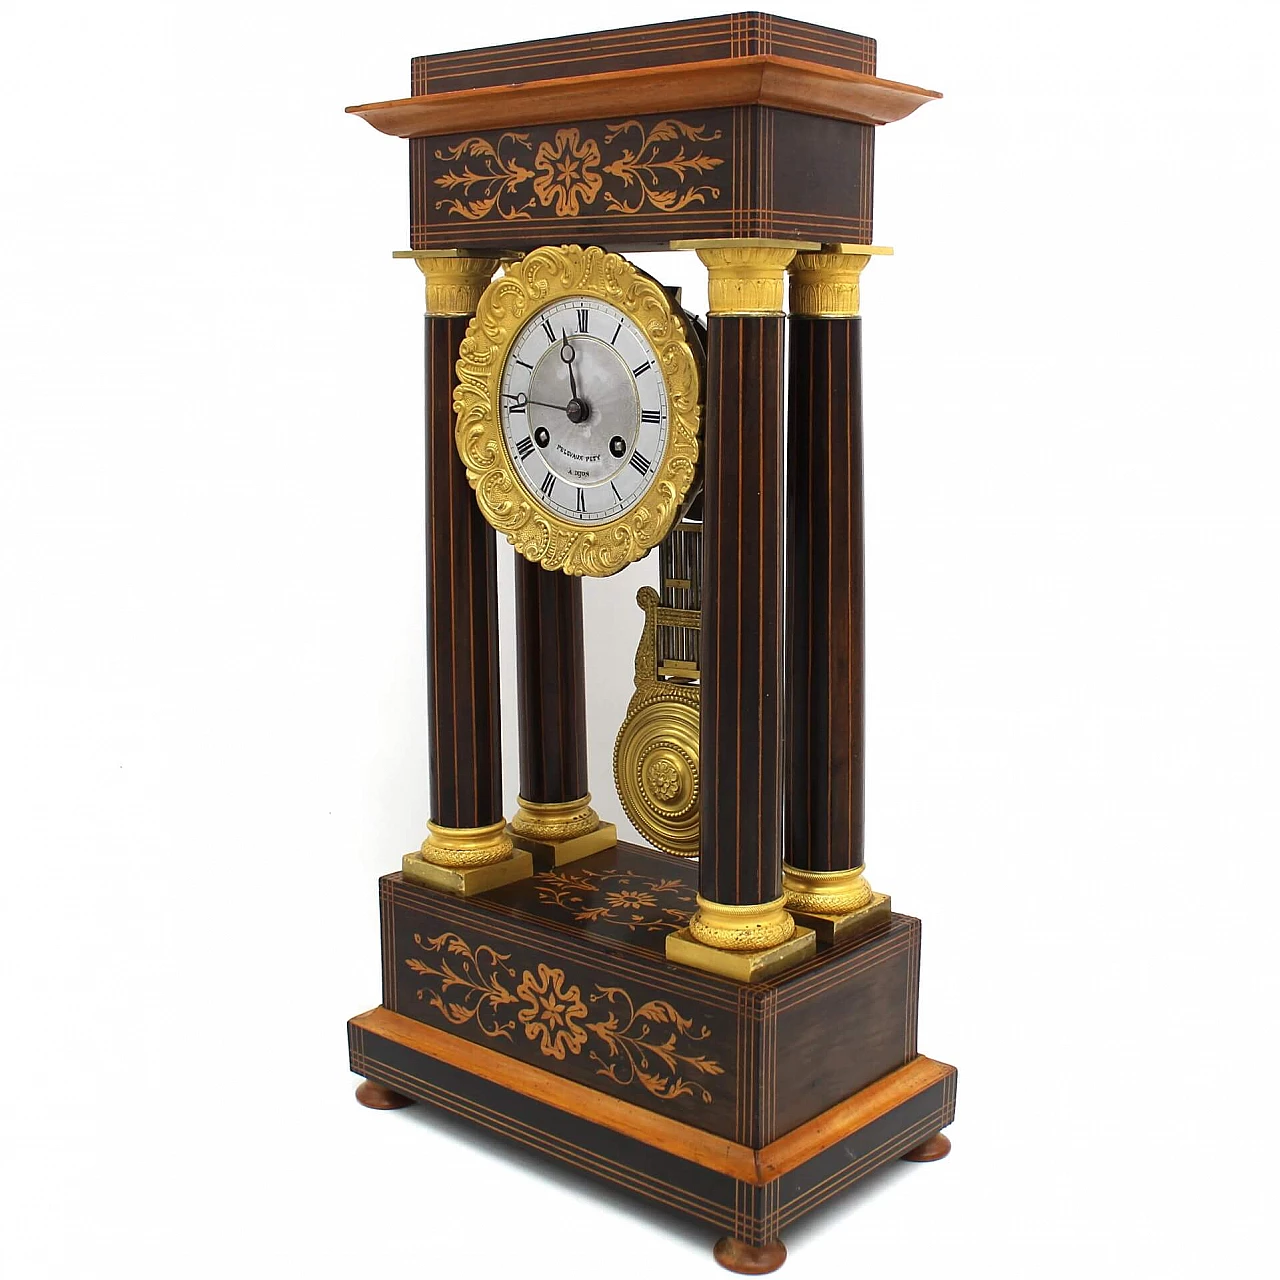 Charles X pendulum clock in inlaid rosewood and bronze, 19th century 1254351